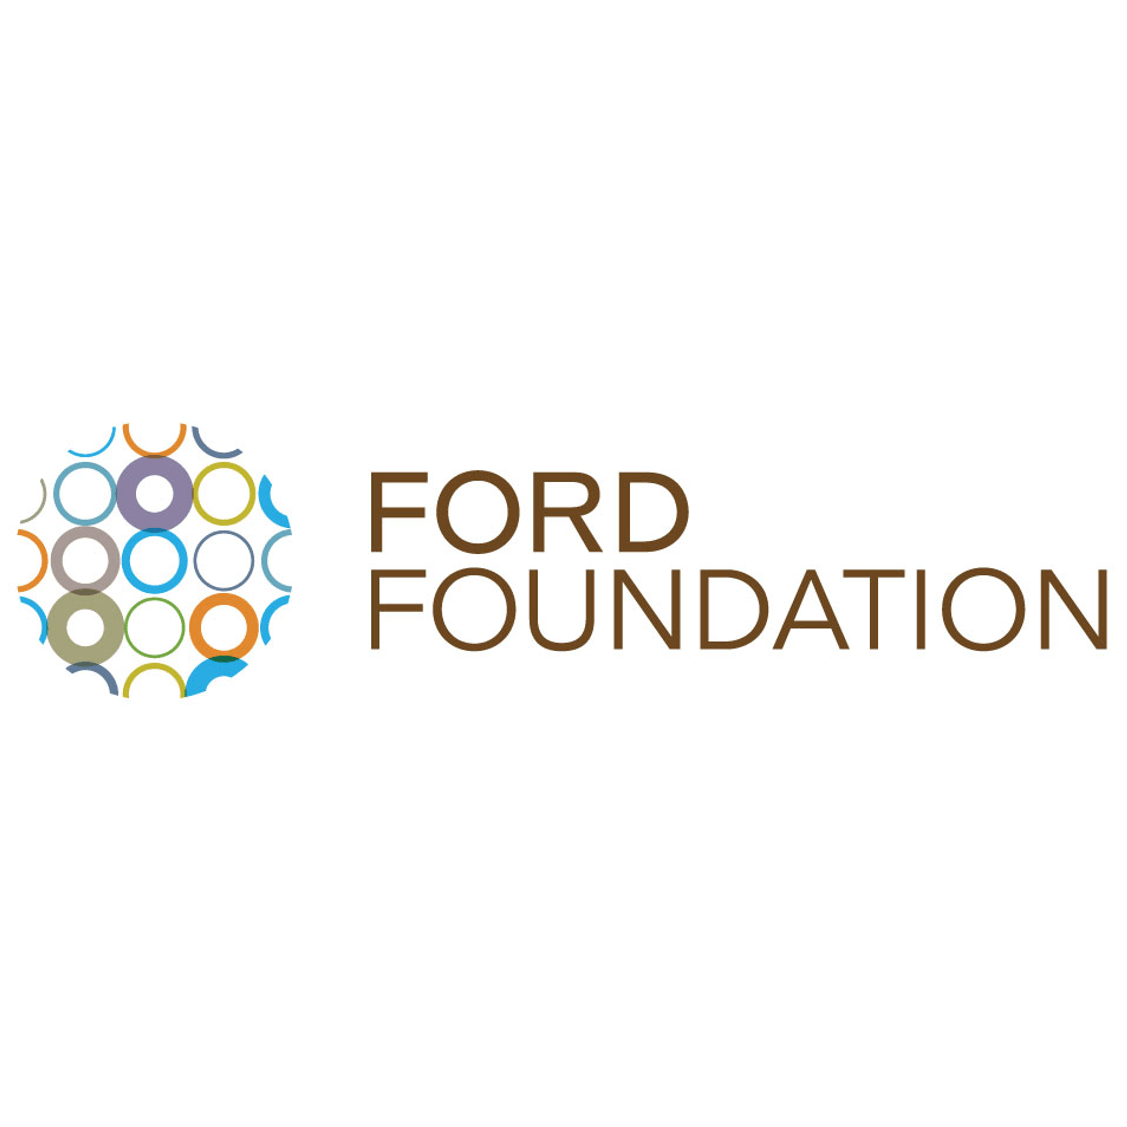 Ford-Foundation-logo-square